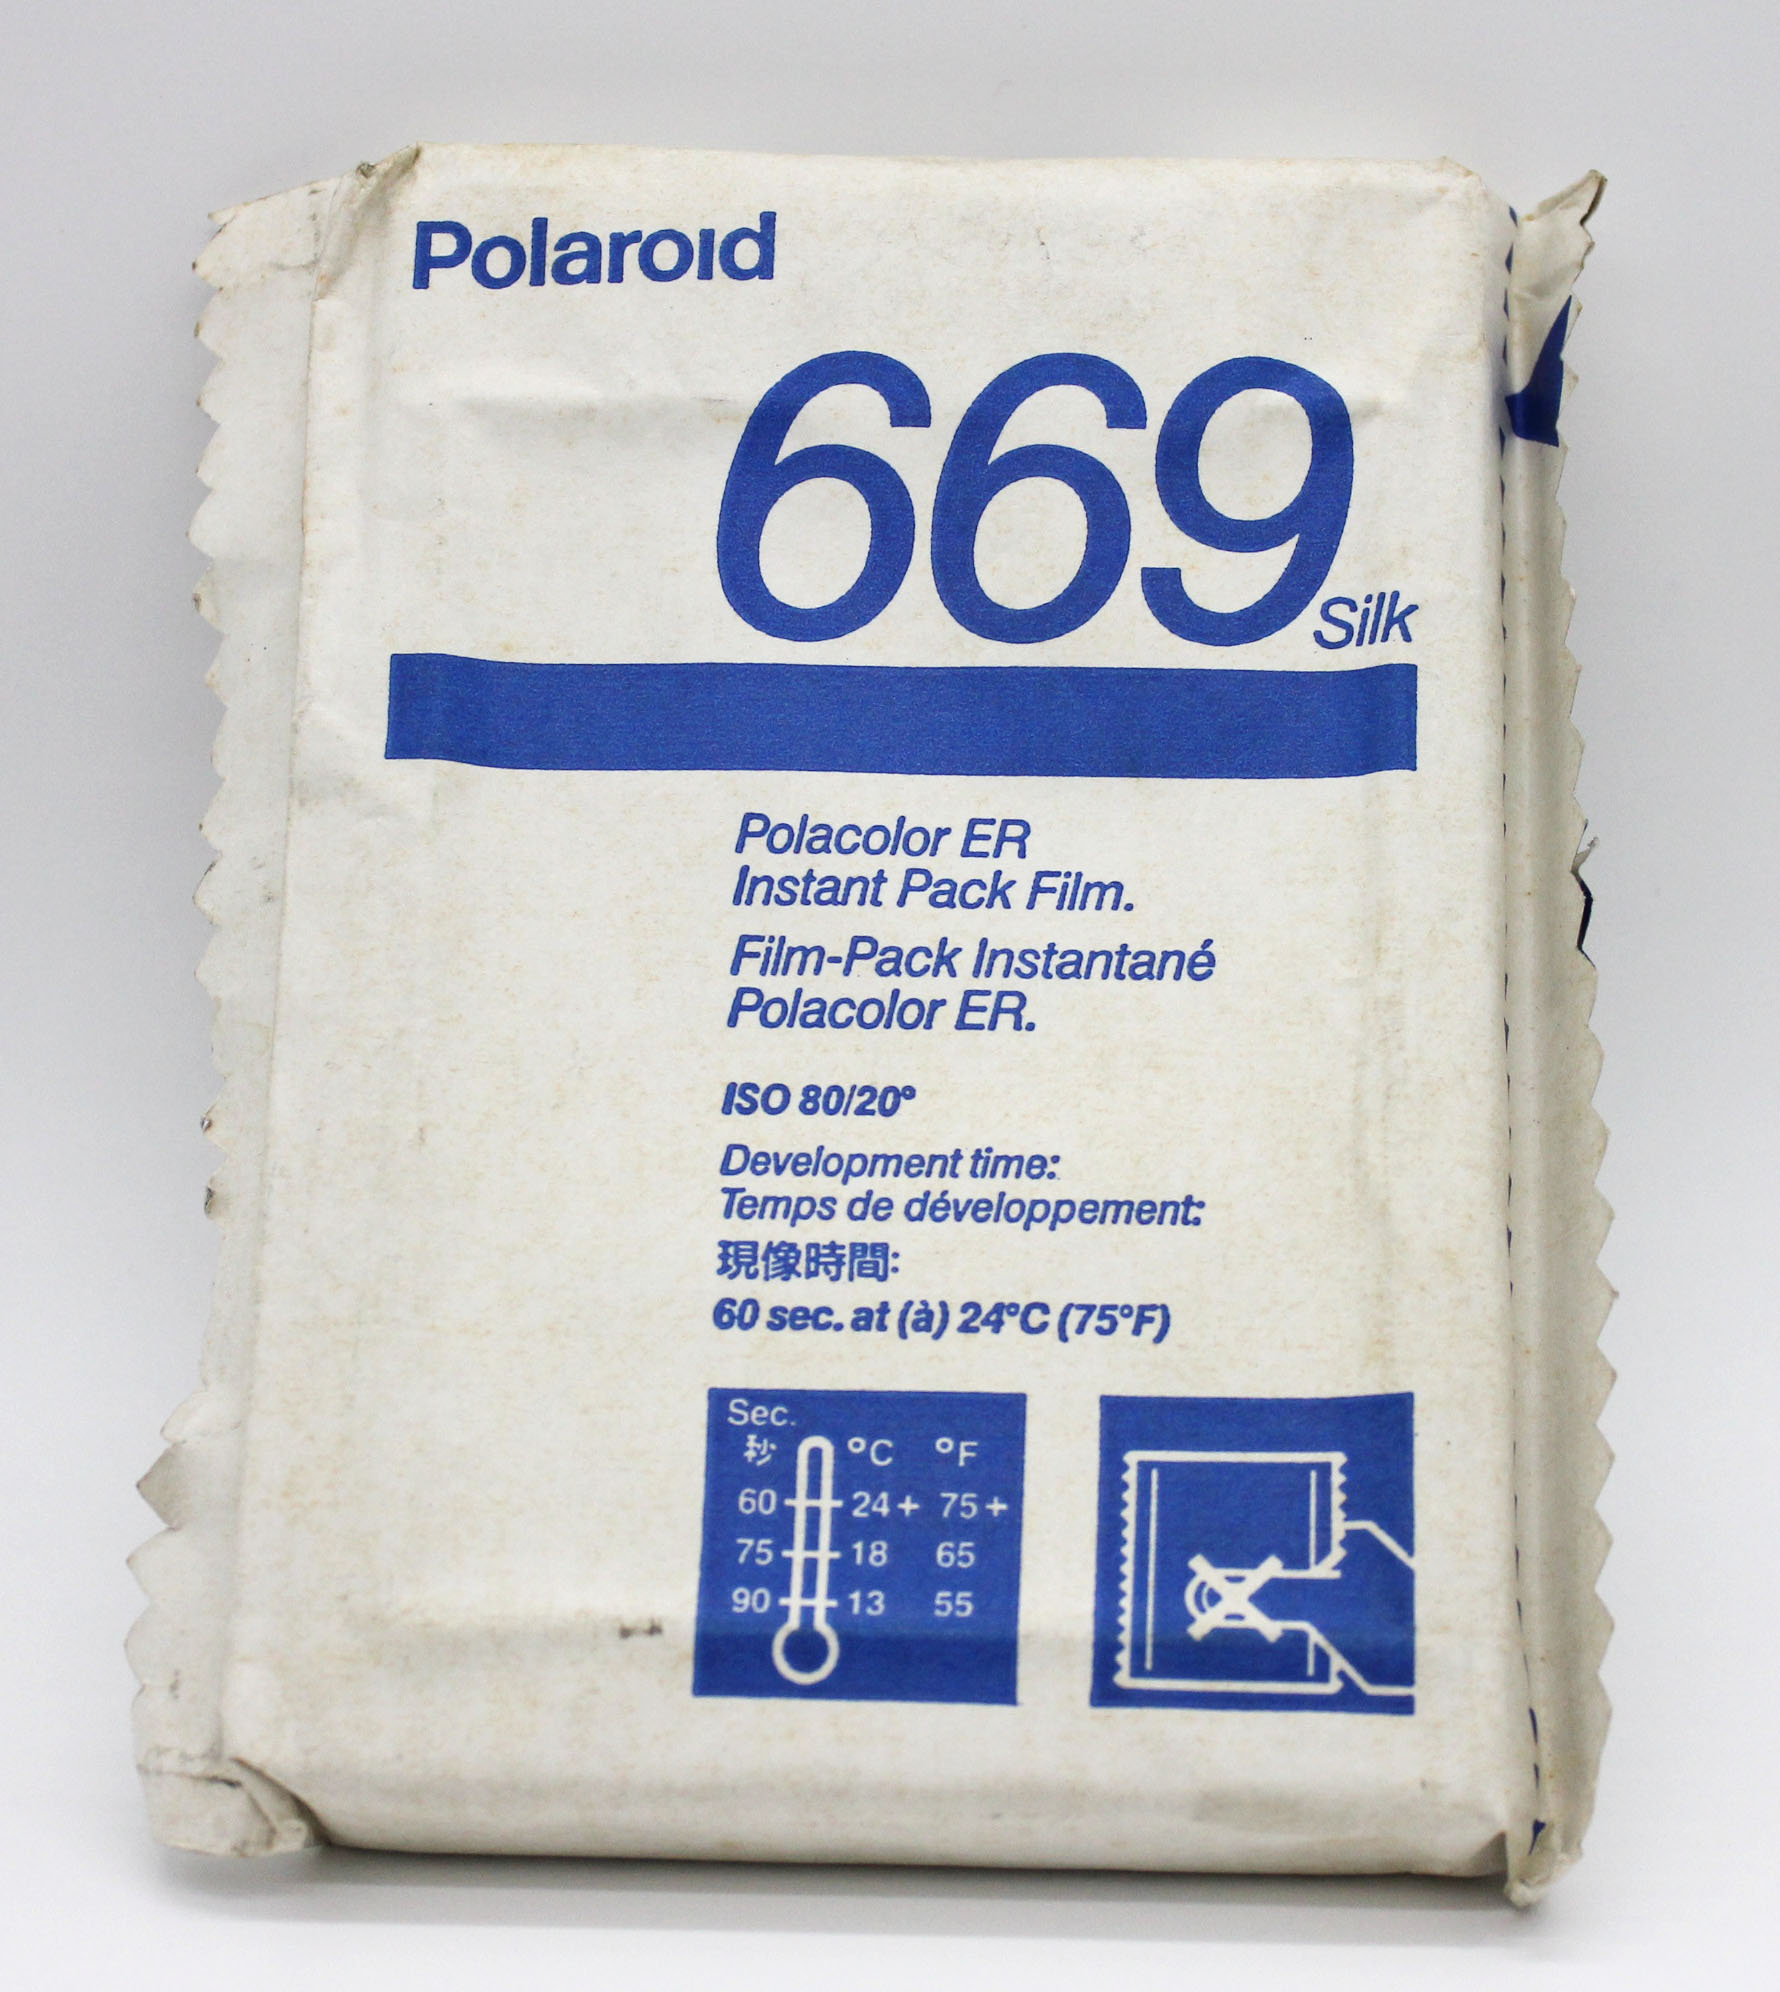  Polaroid 669 Silk Polacolor ER Instant Pack Film Expired 12/1991 from Japan Photo 0